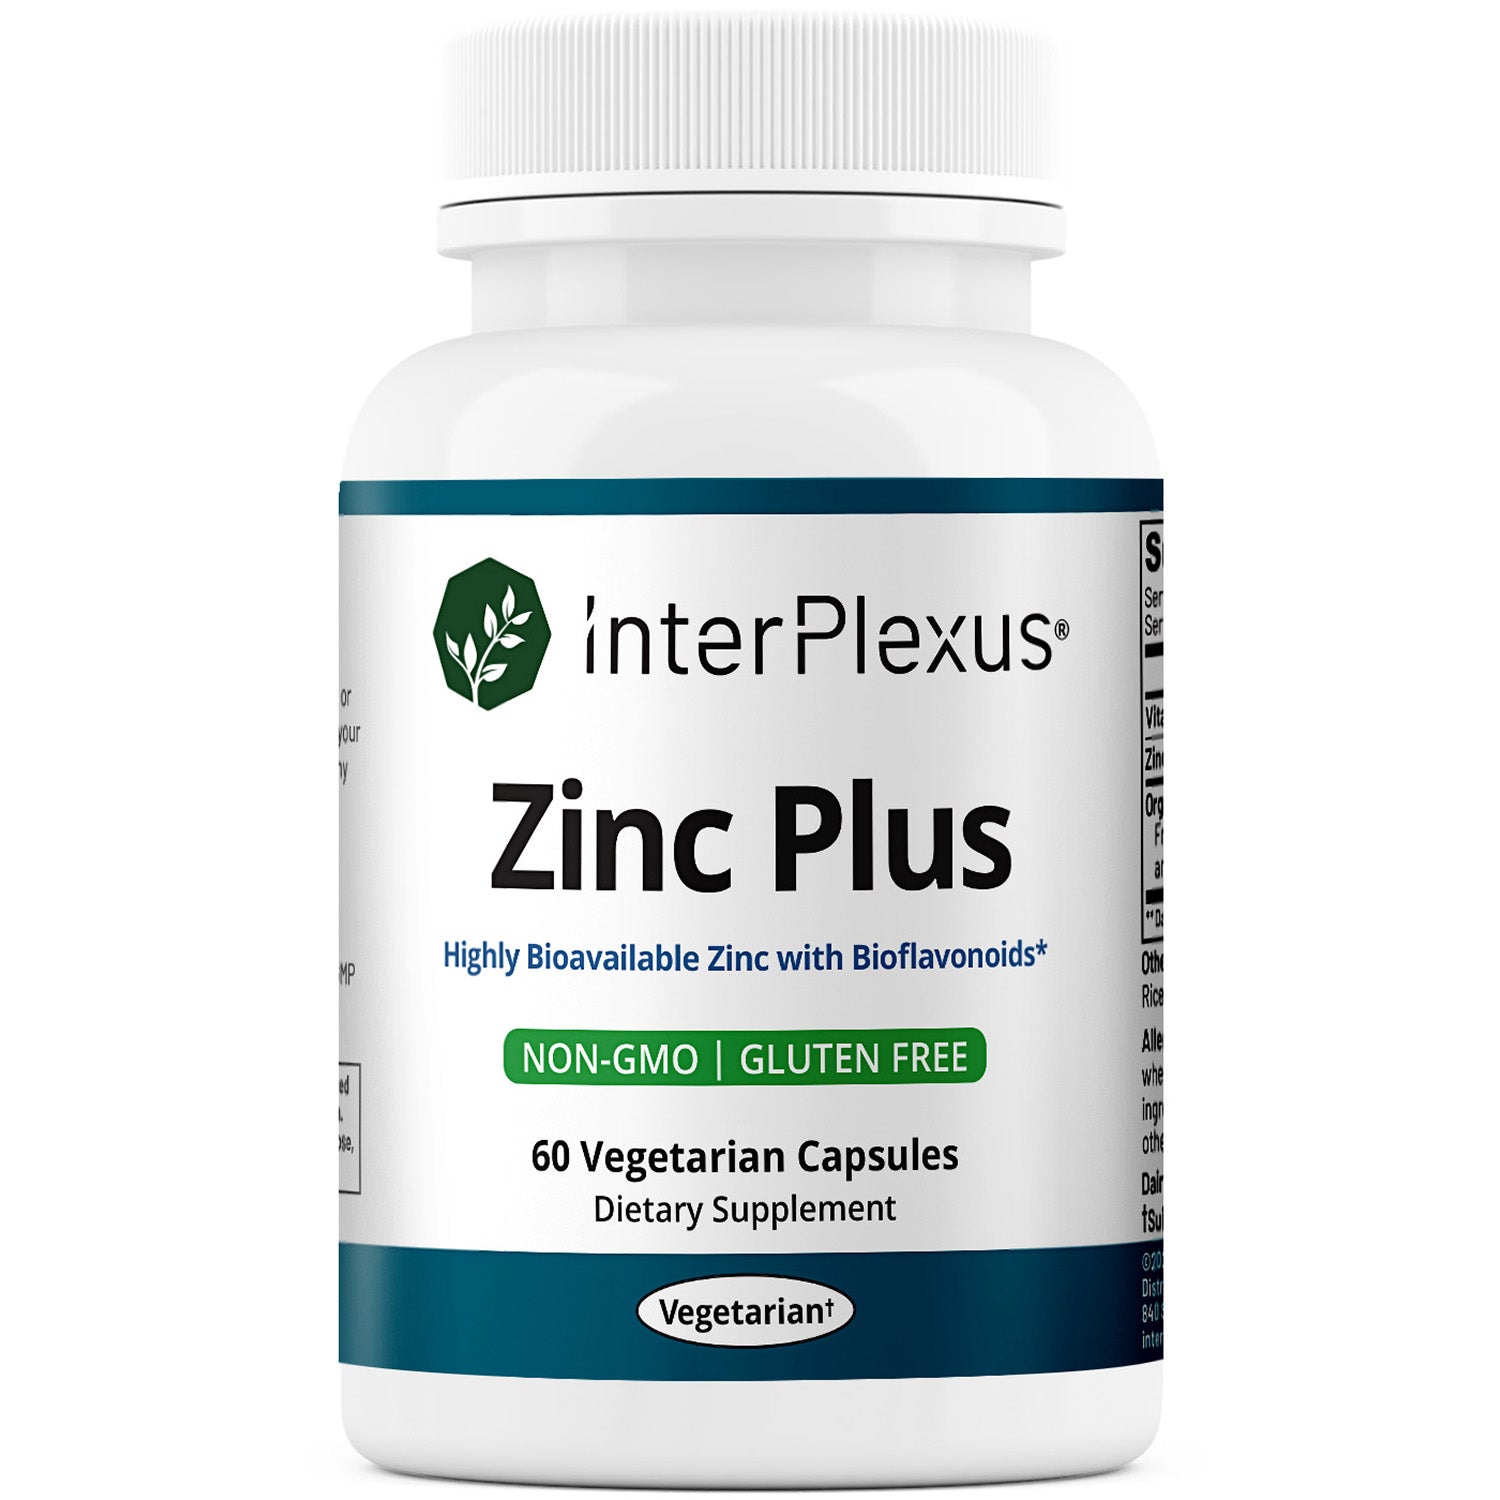 Zinc Plus Main Label | Highly Bioavailable Zinc with Bioflavonoids